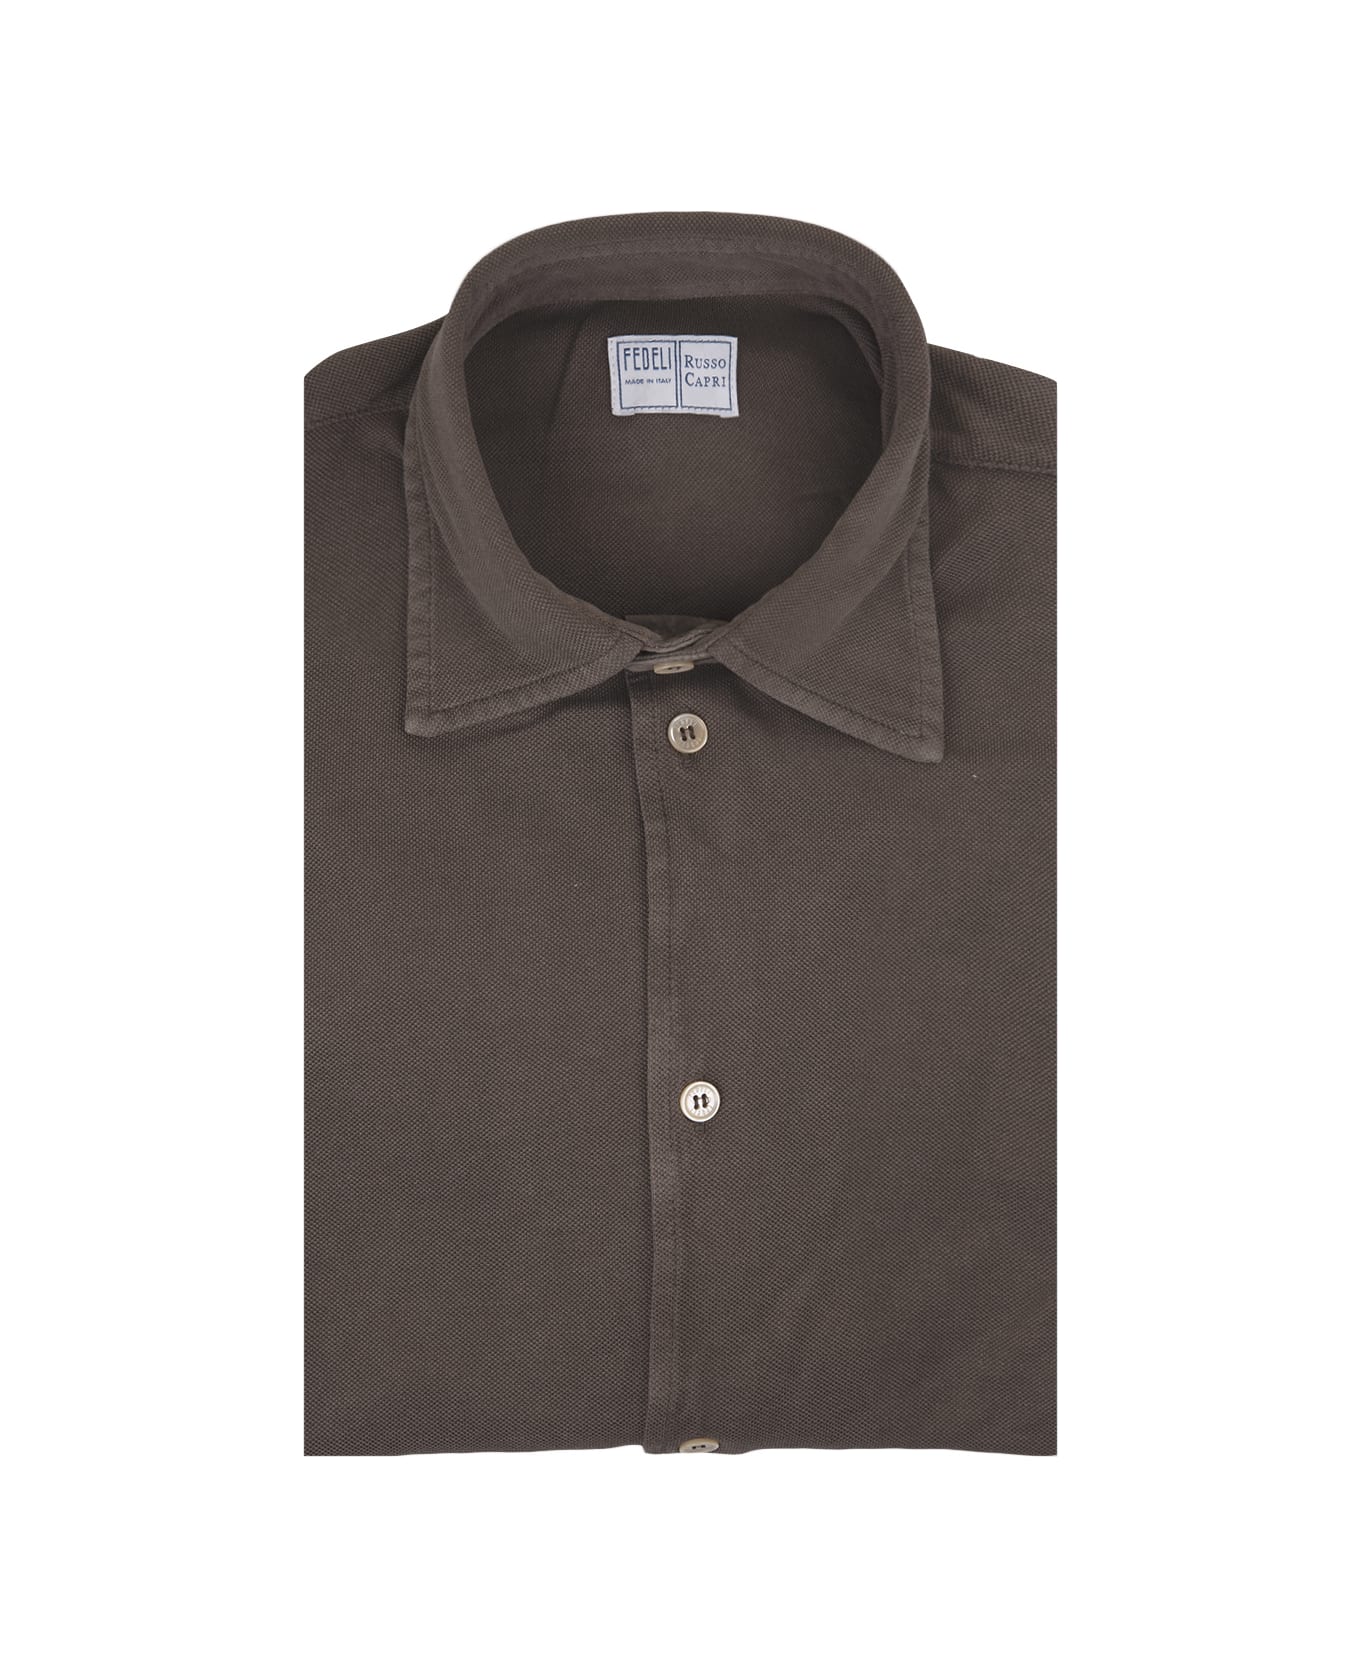 Fedeli Shirt In Brown Cotton Piqué - Brown